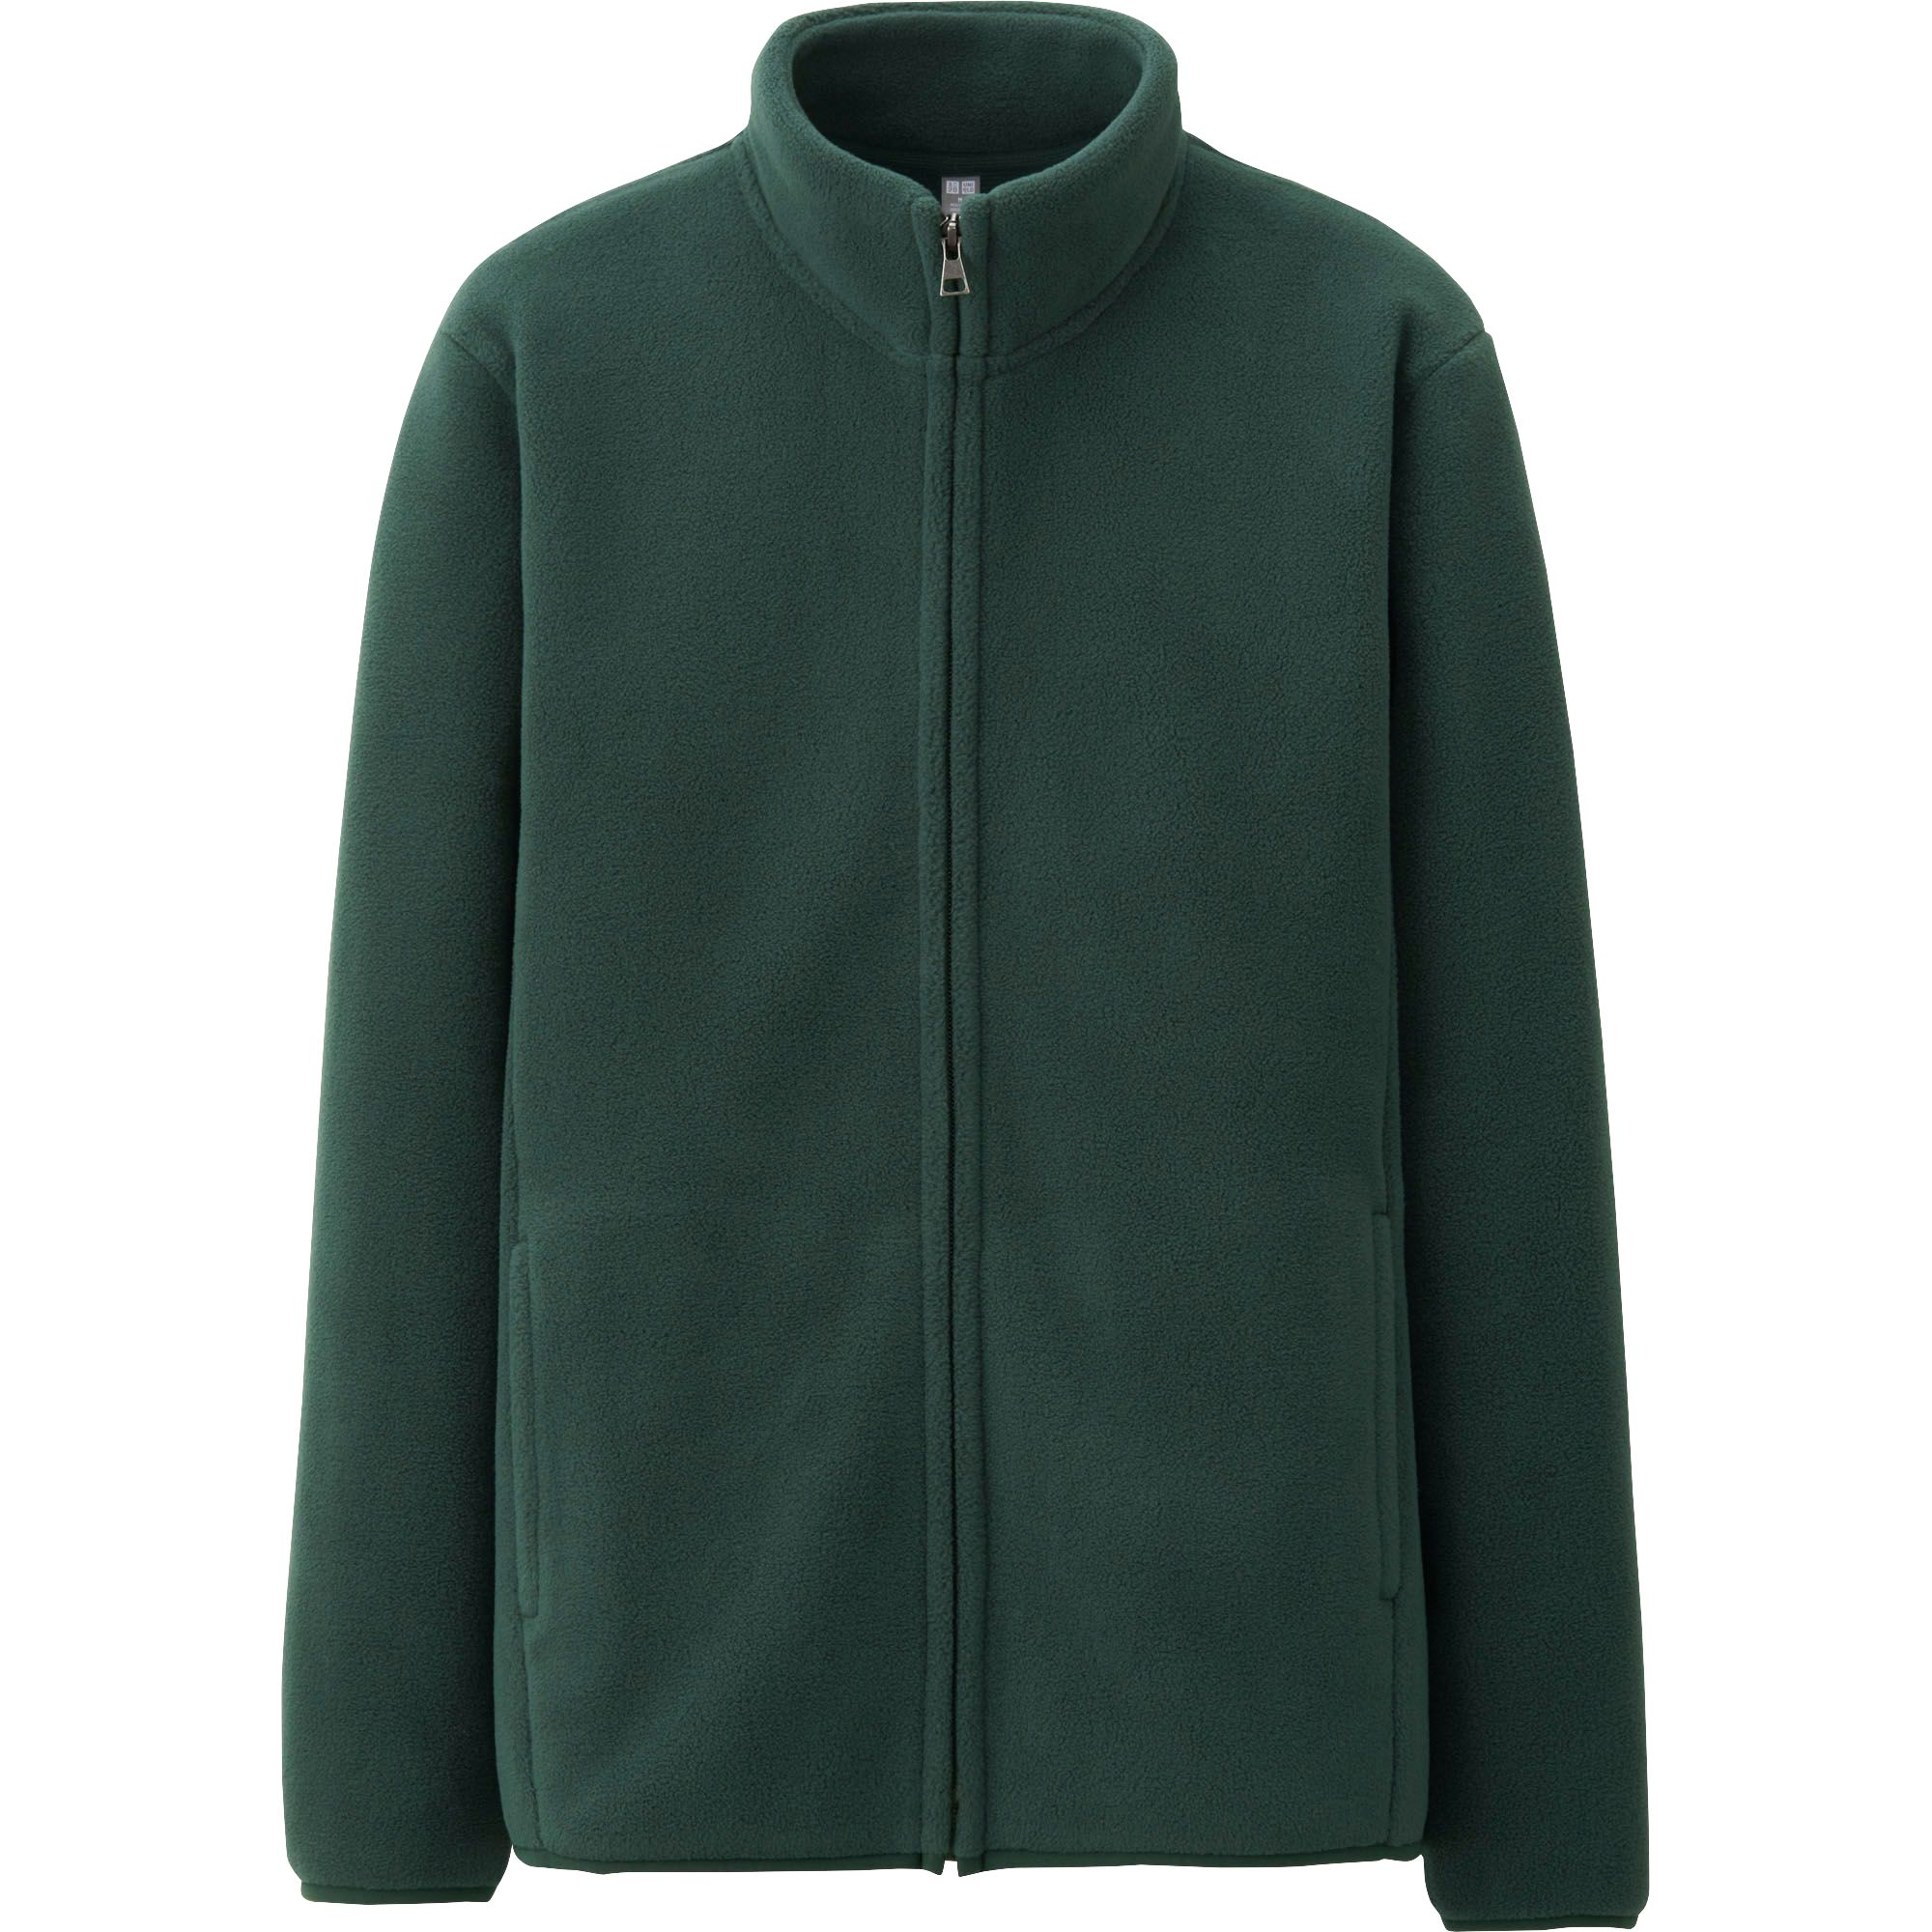 Uniqlo Men Fleece Full-Zip Long Sleeve Jacket in Green for ...